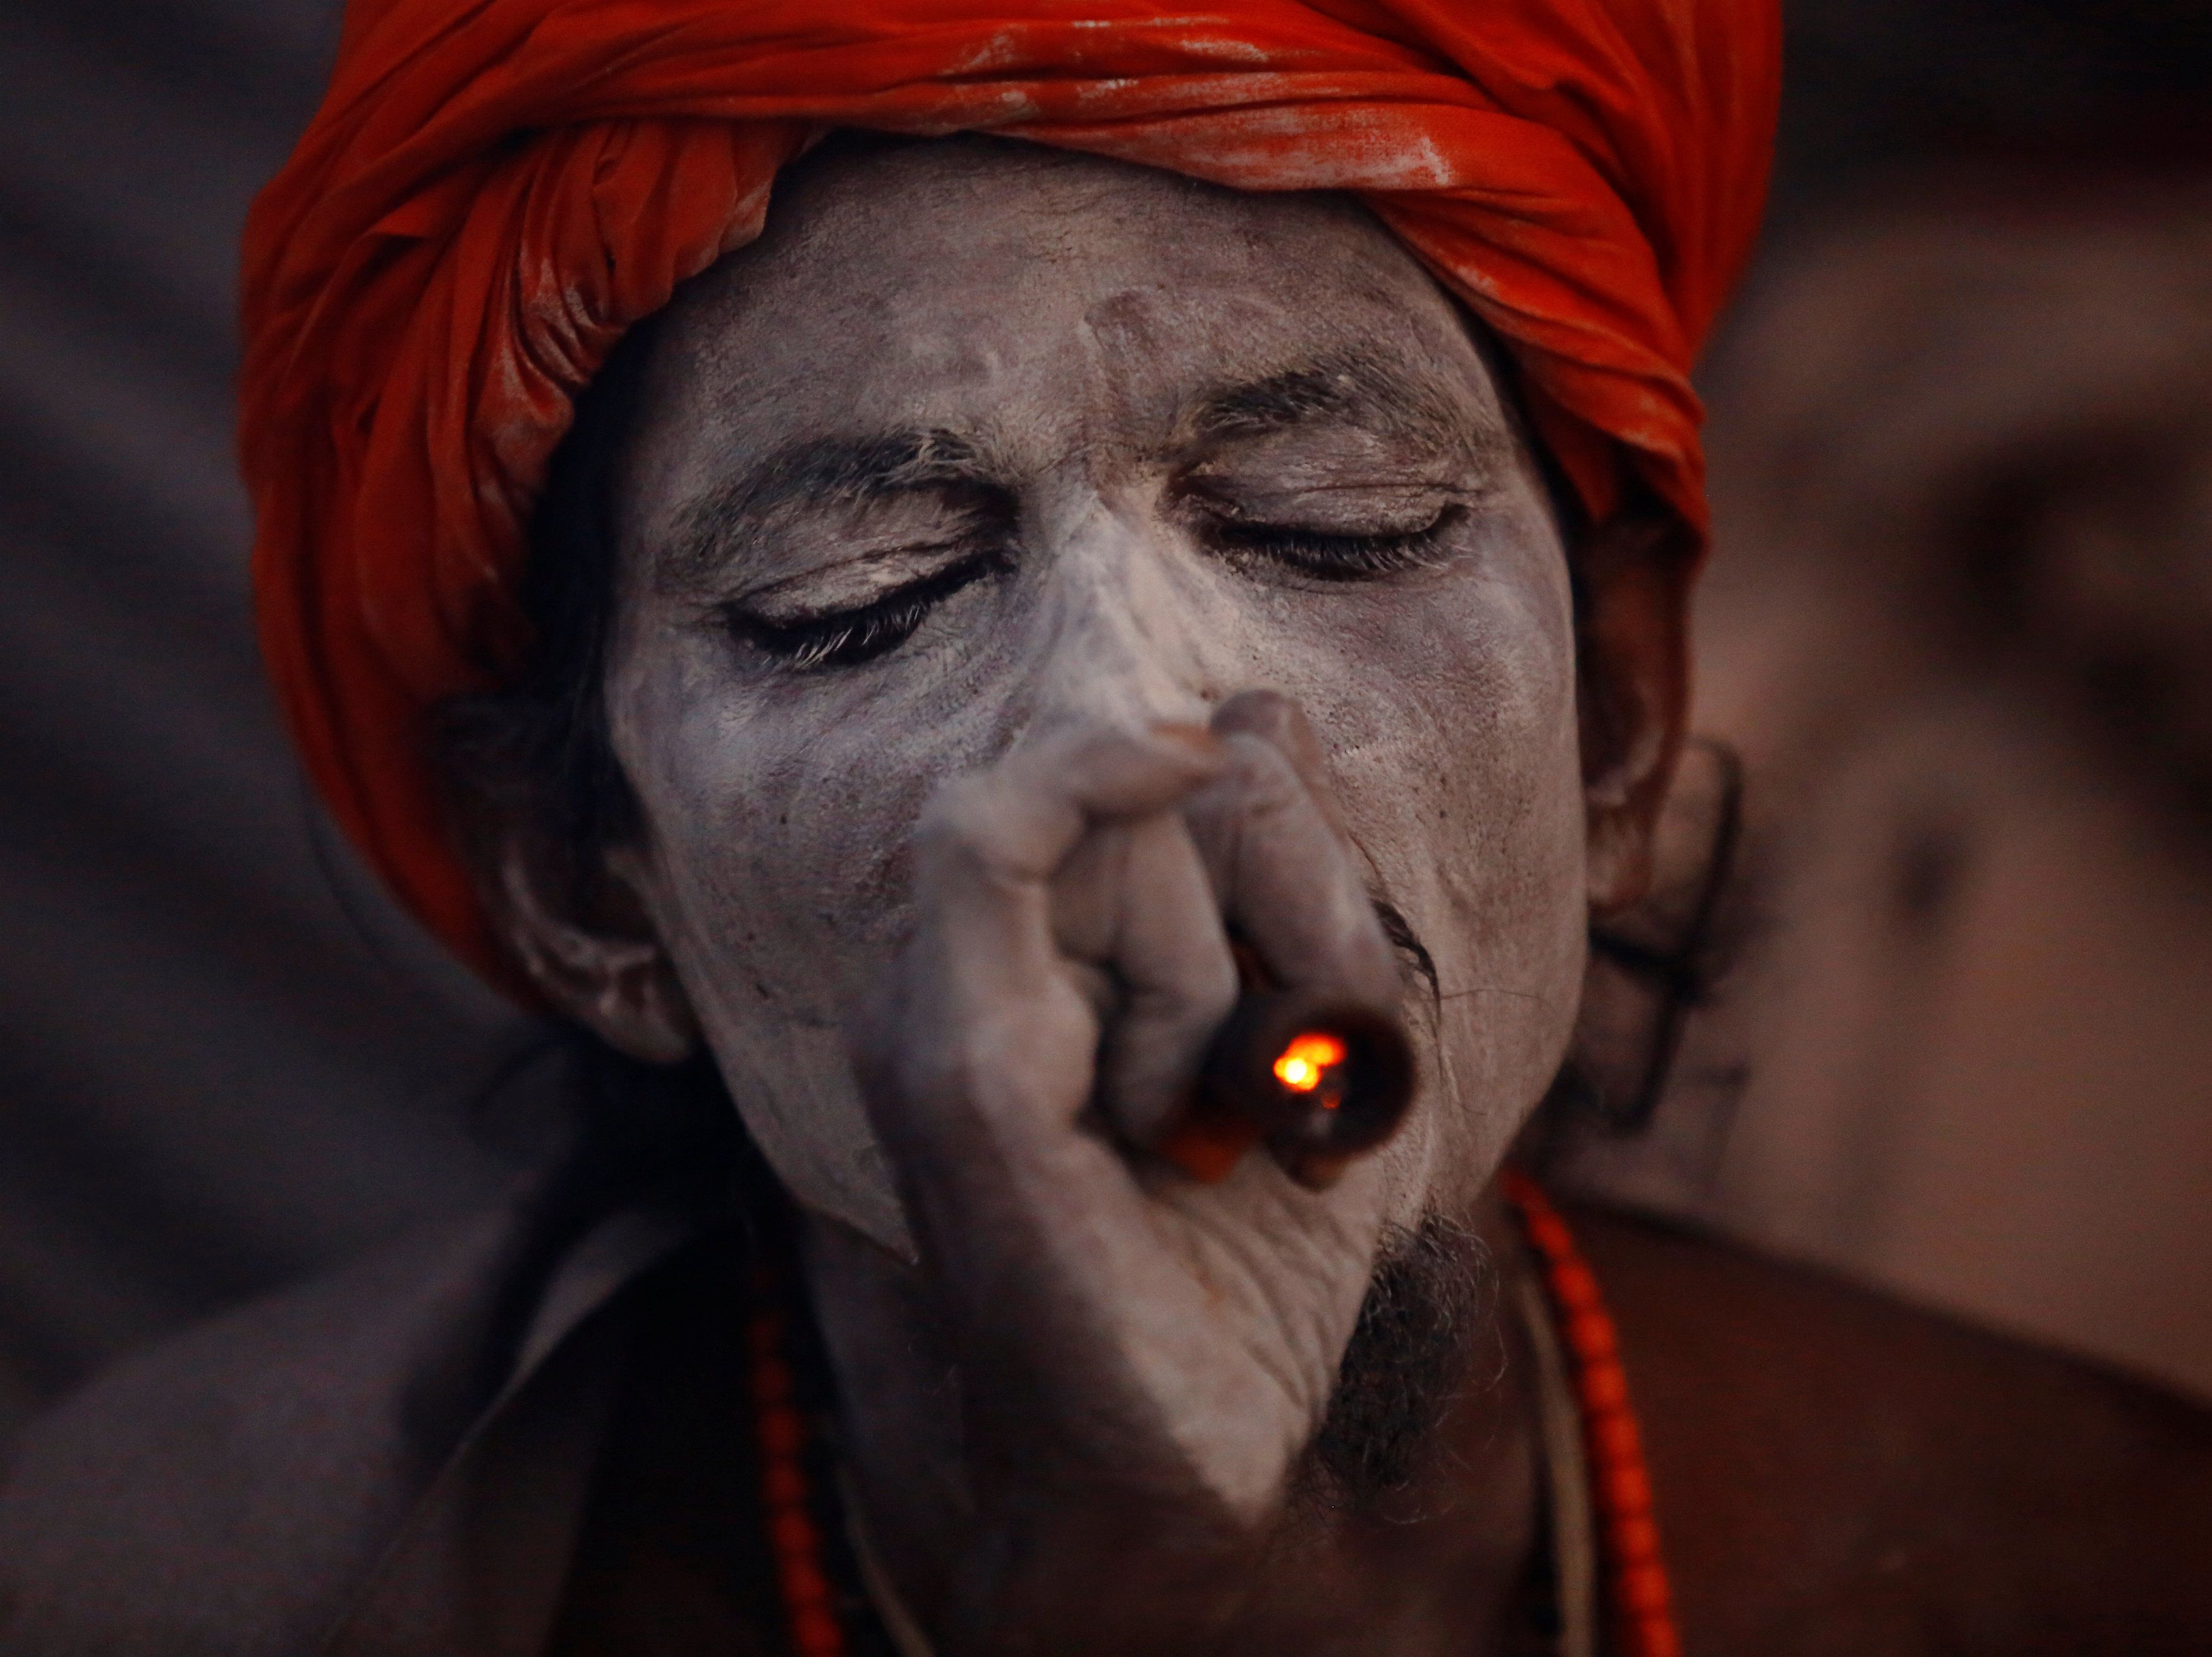 Maha Shivaratri 2017: Stunning image show holy men smoking